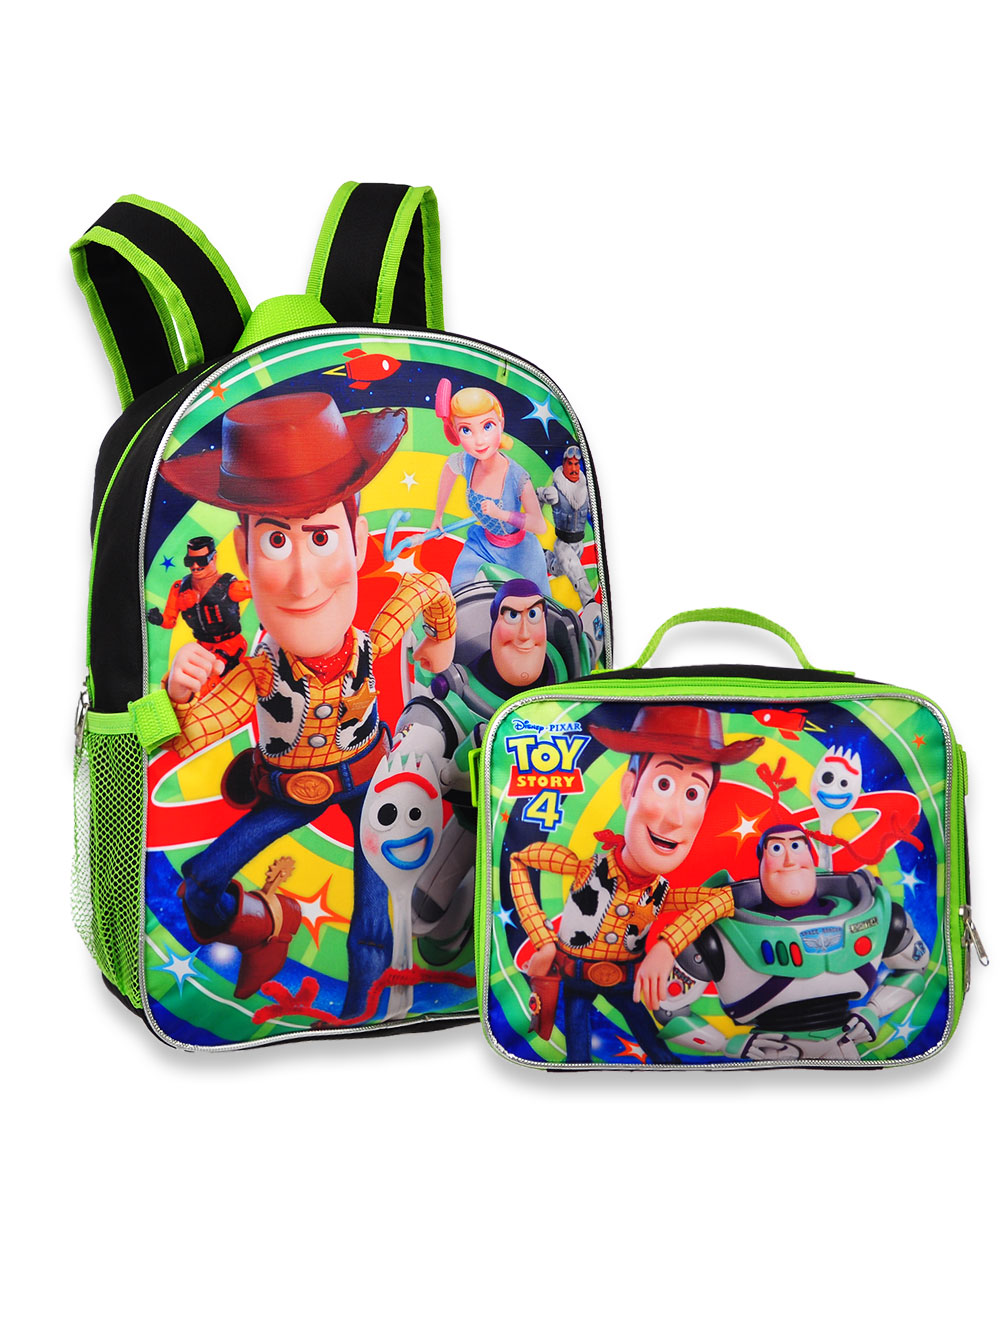 Disney Woody Buzz Lightyear Aliens 305398 Toys Story 4 Lunch Bag